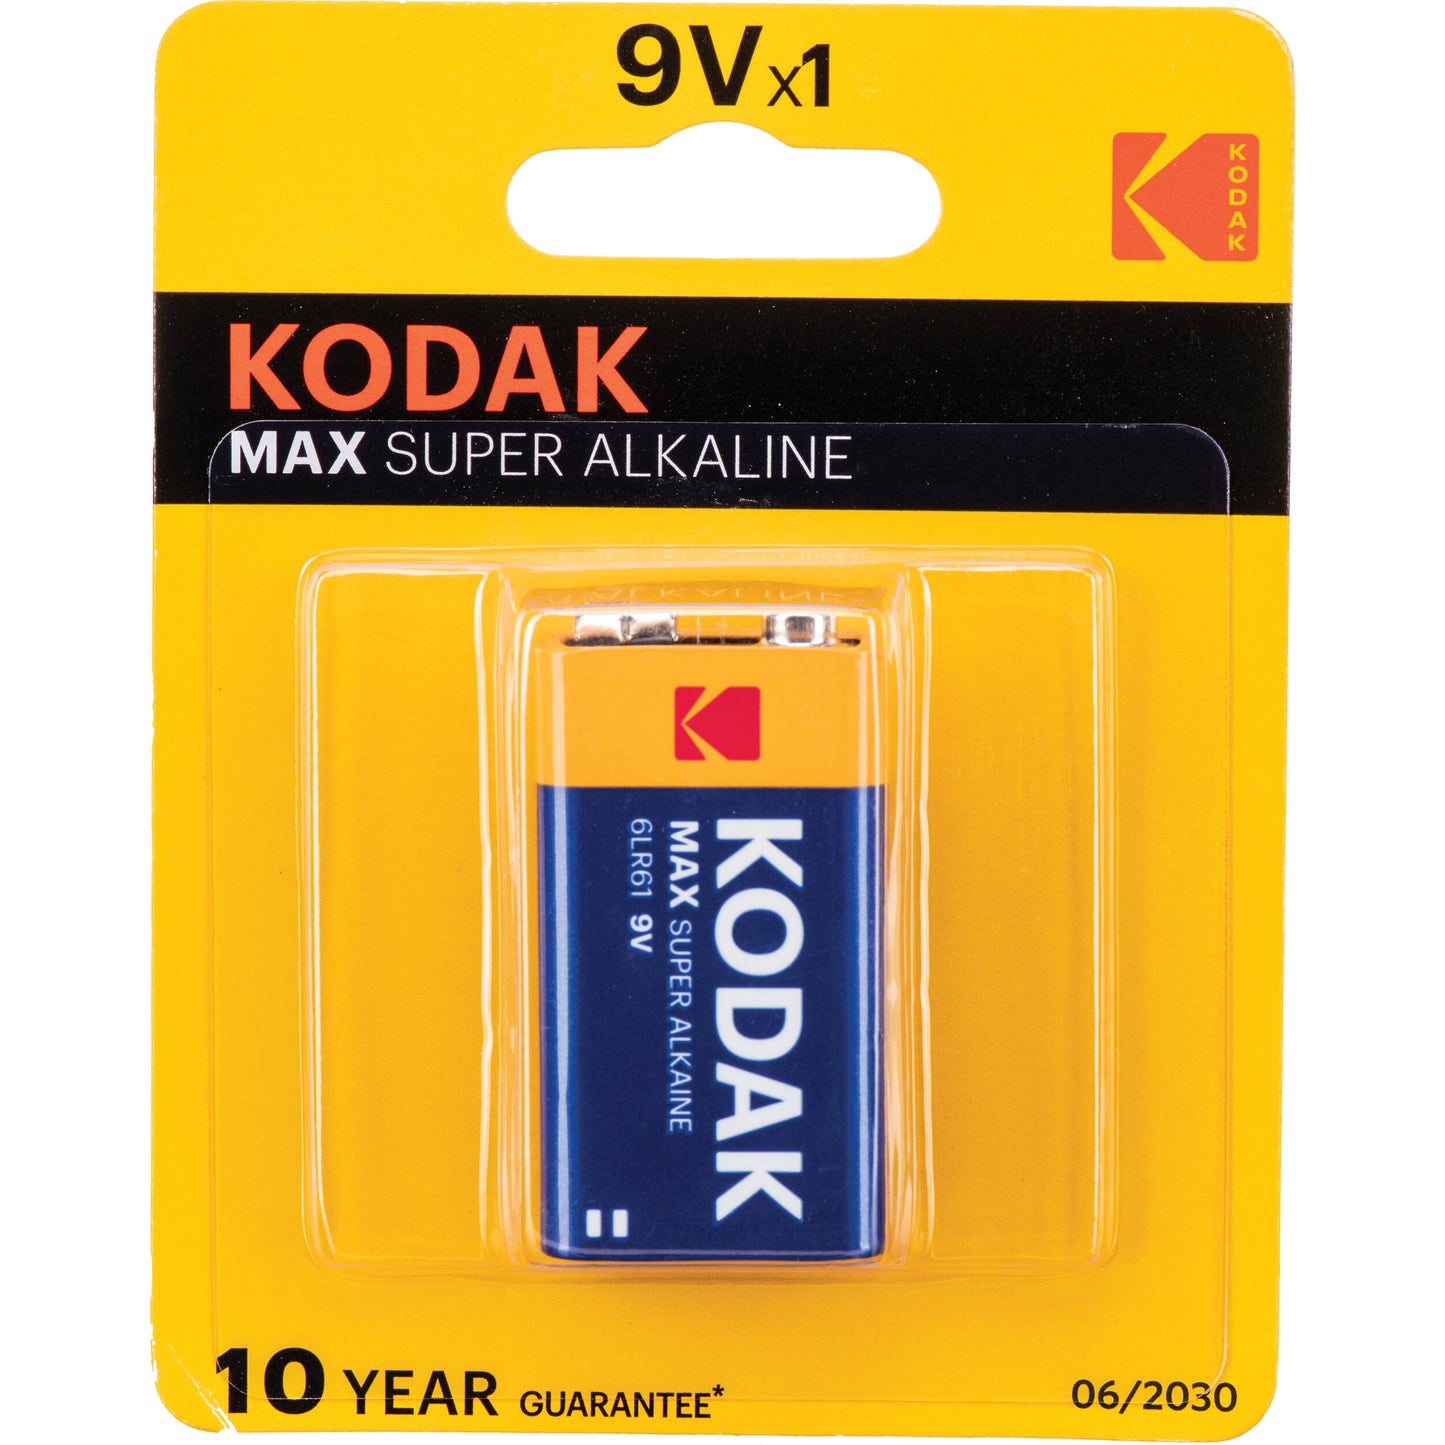 Kodak Max Super Alkaline Batteries 9Vx1